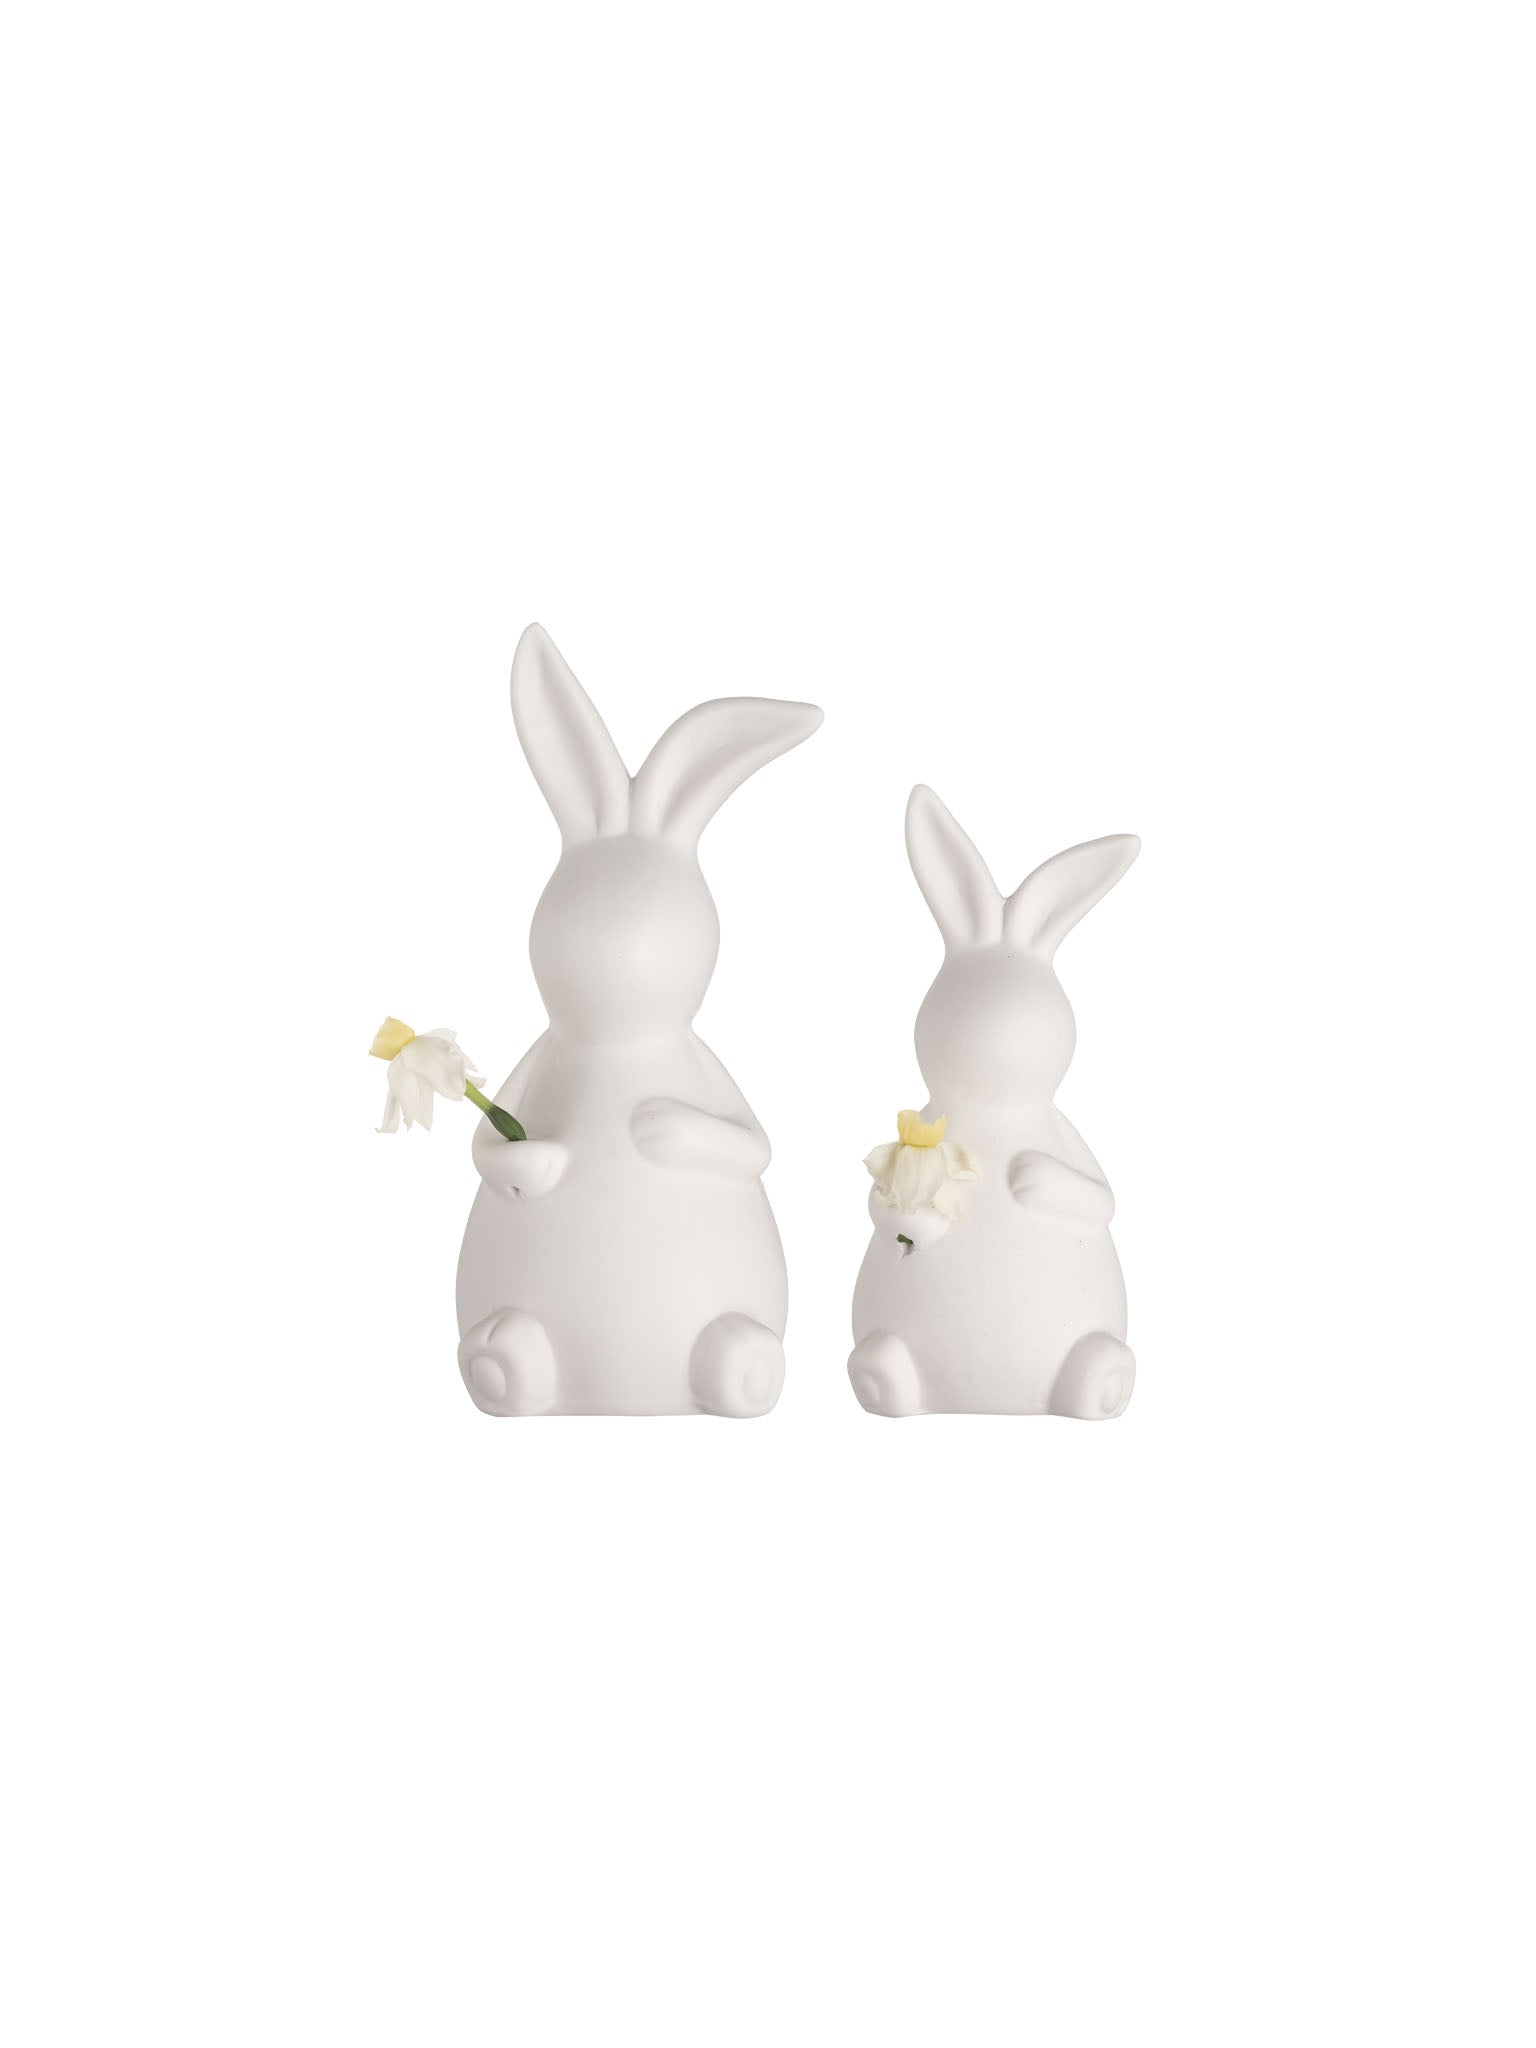 ceramic easter bunny